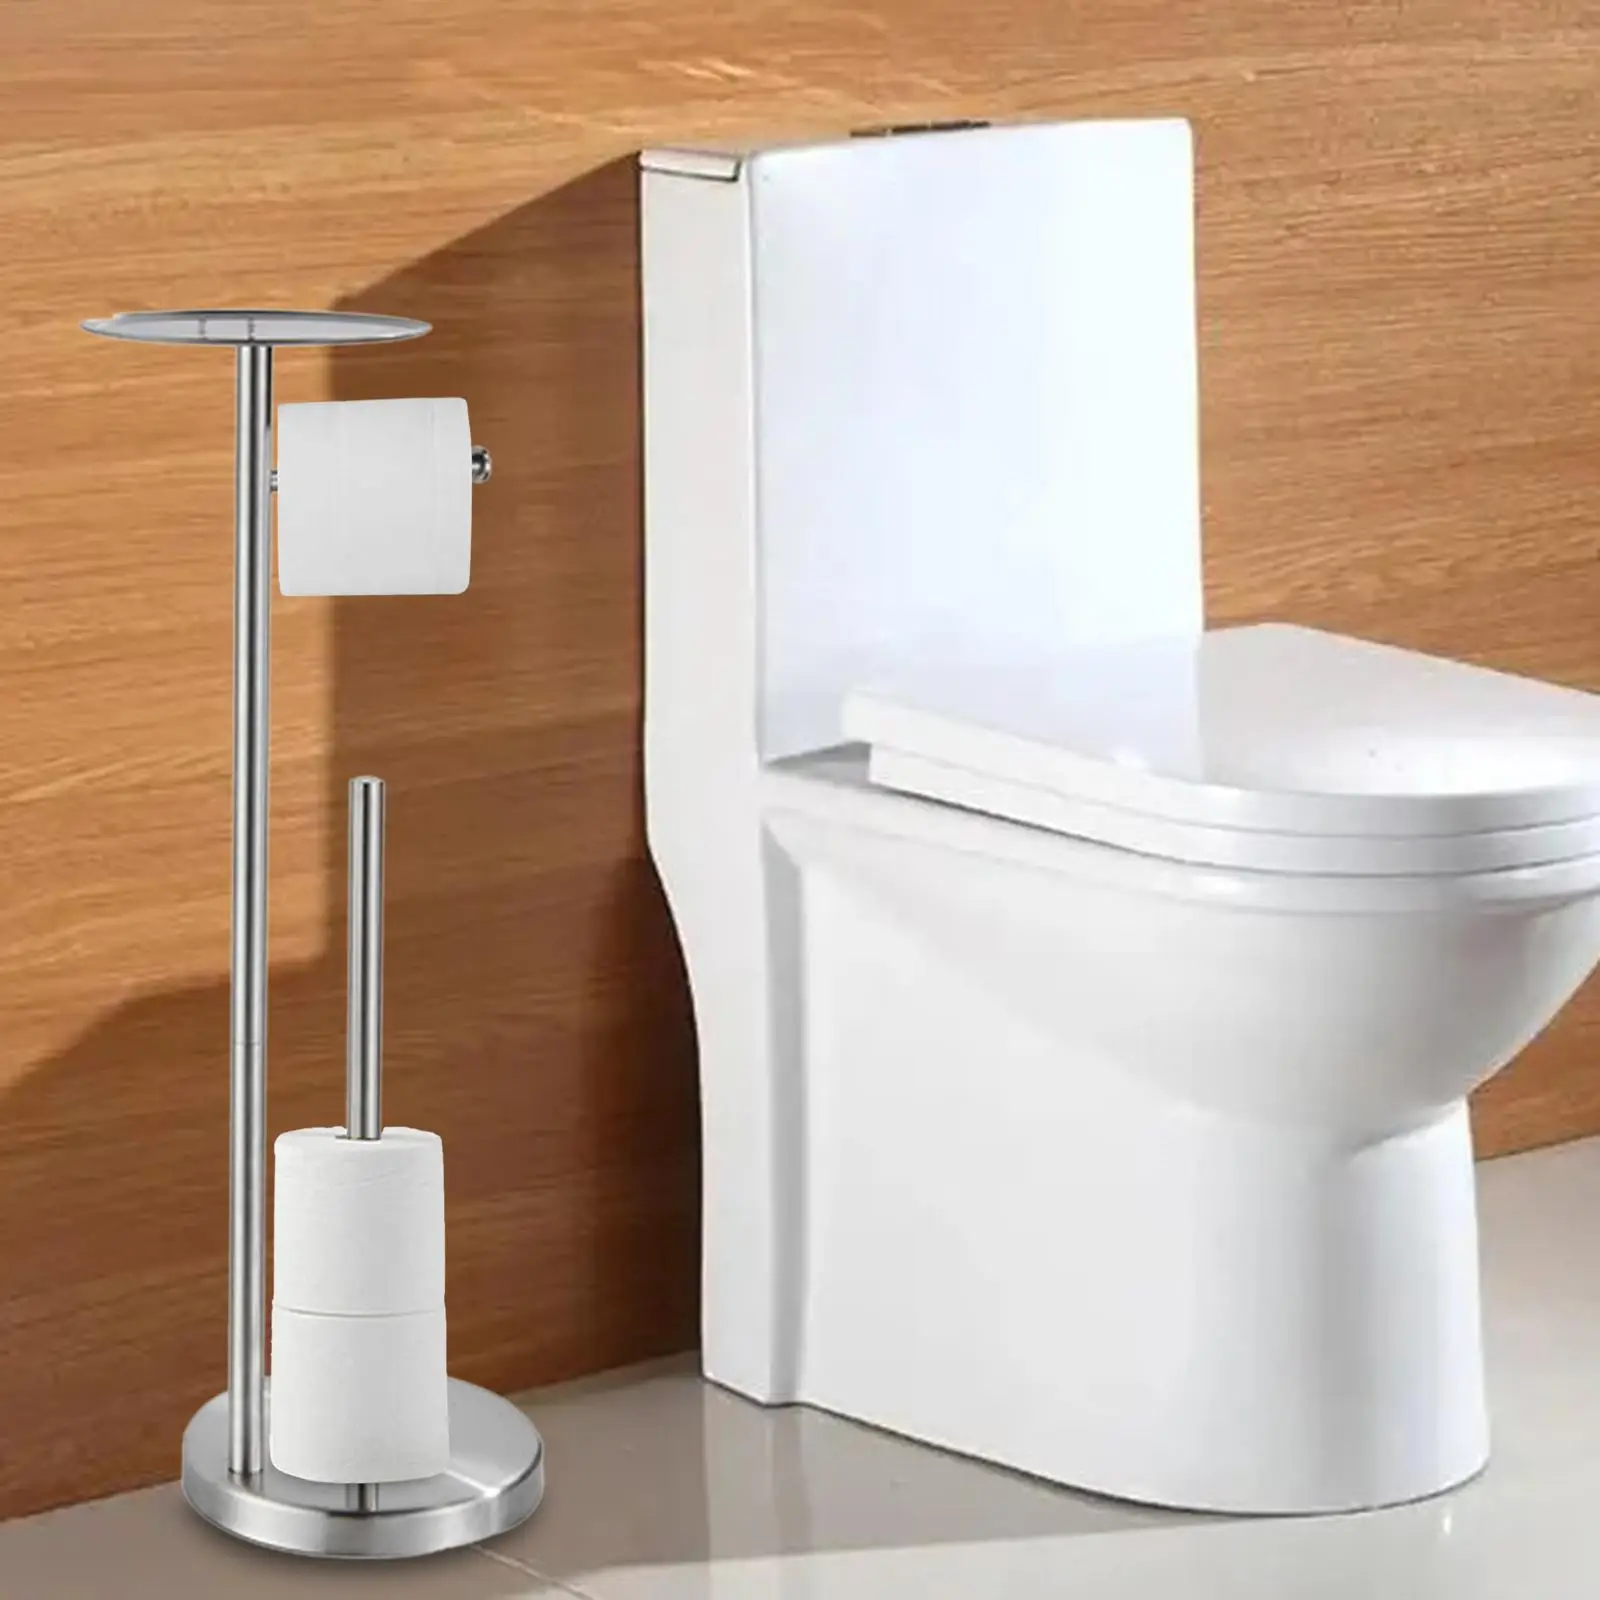 Free Standing Toilet Paper Tissue Dispenser with Top Storage Shelf Organization Floor Paper Towel Holder for Bathroom Farmhouse